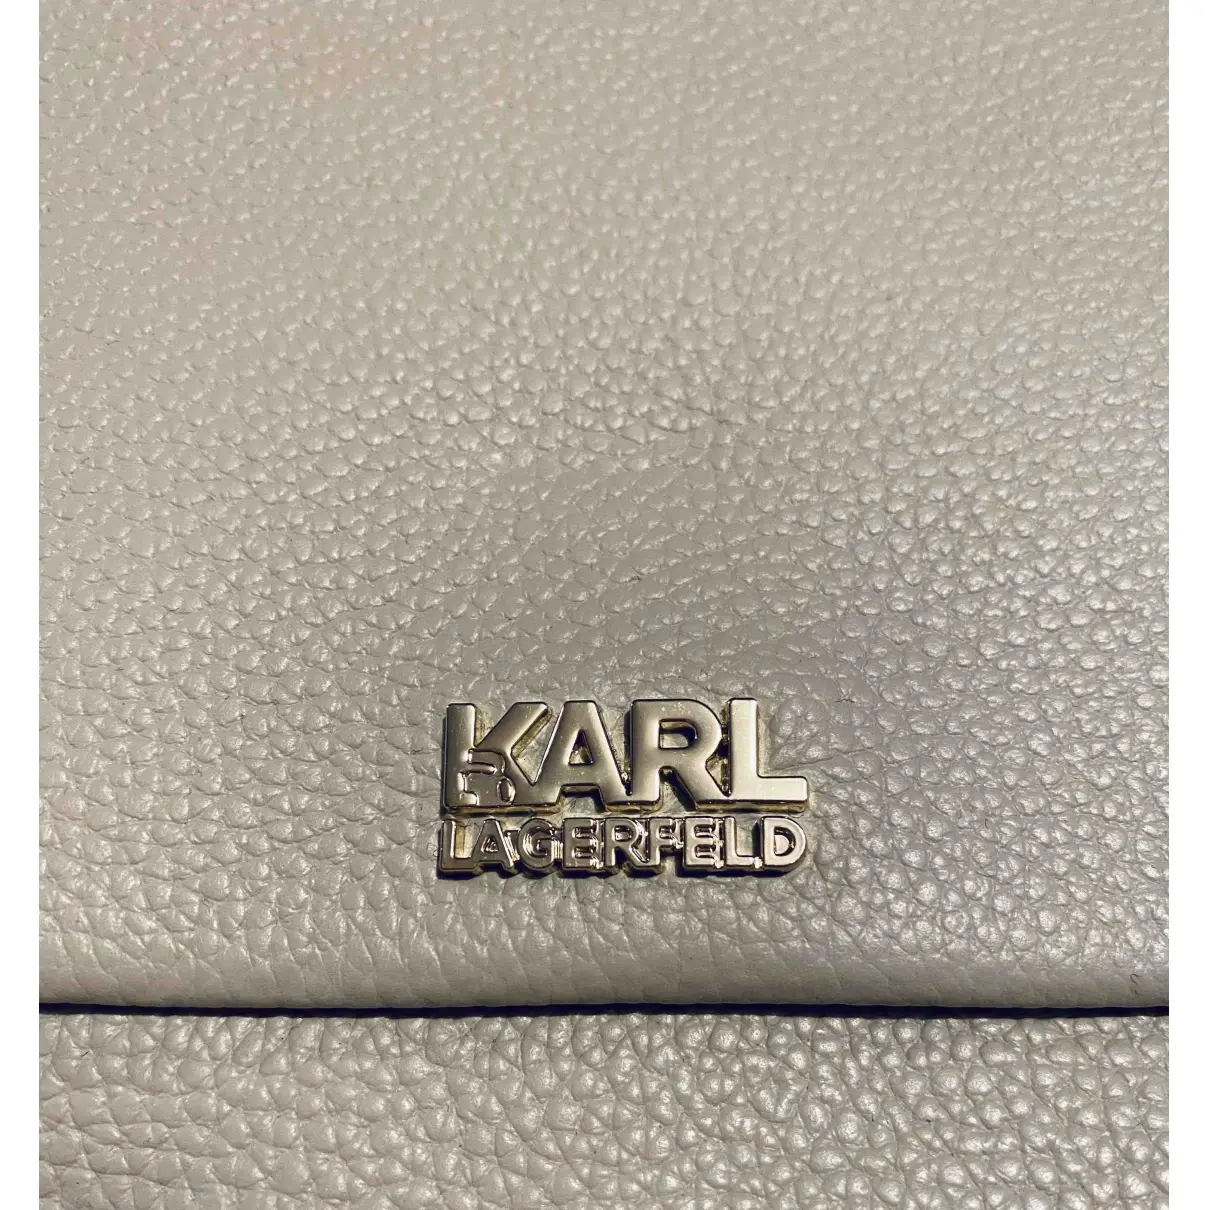 Luxury Karl Lagerfeld Handbags Women